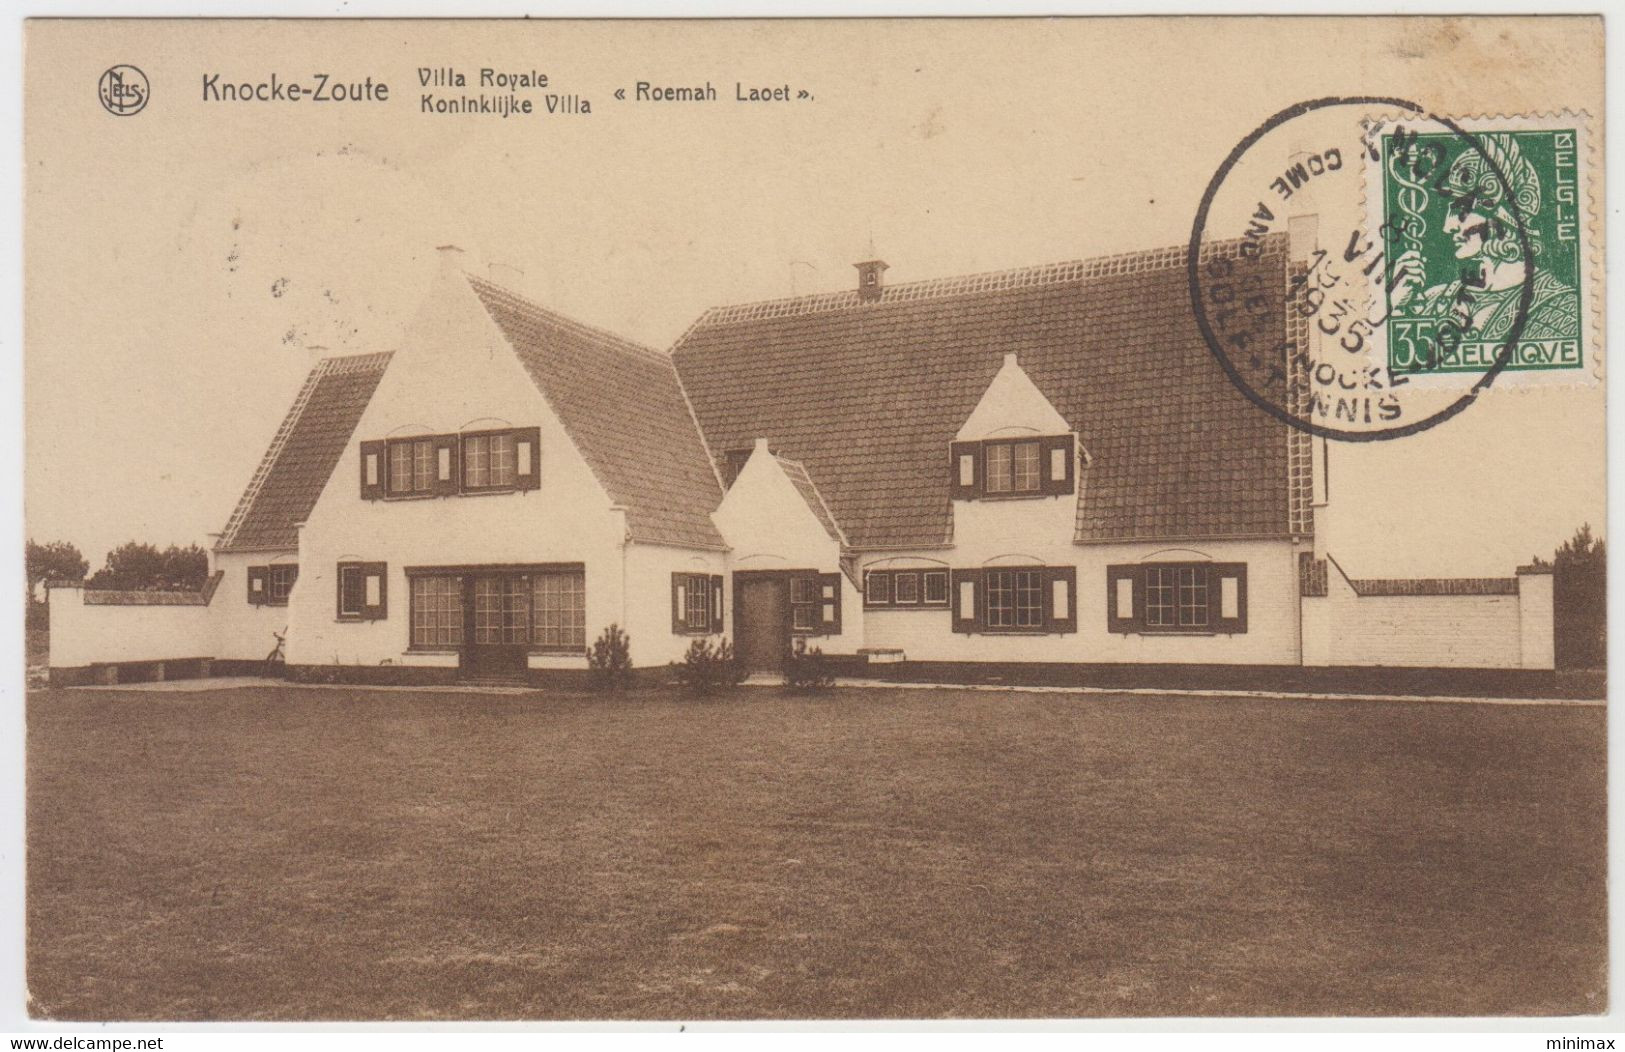 Knocke- Zoute - Villa Royale " Roemah Laoet " - Knokke